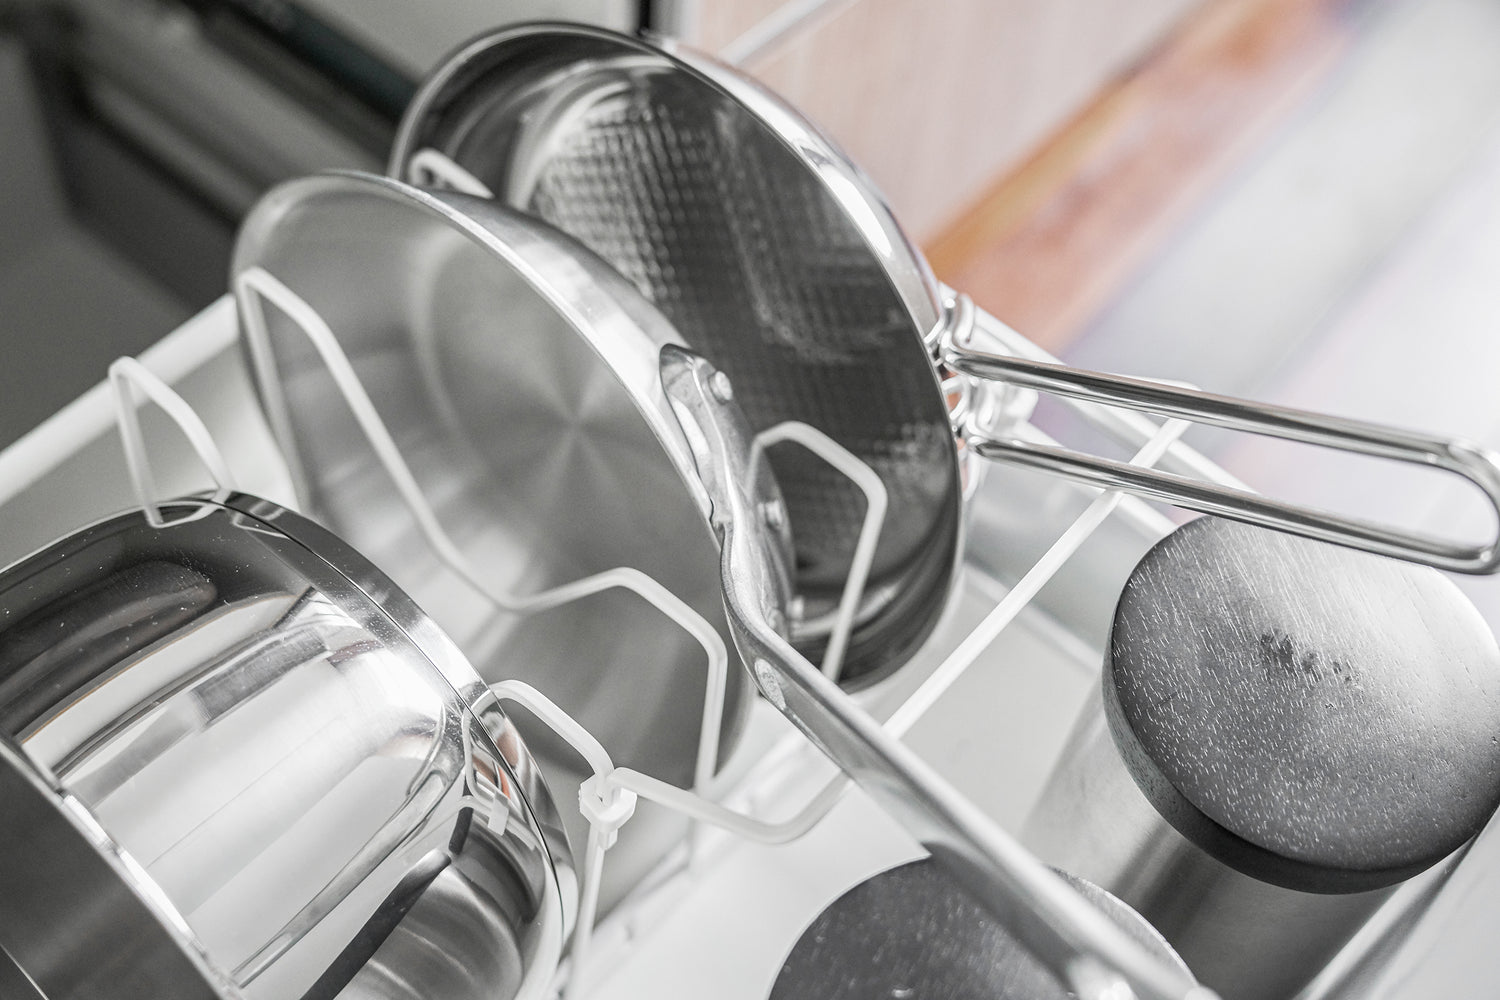 View 5 - Black Slim Dish Rack holding silverware and dishware on kitchen counter by Yamazaki Home.